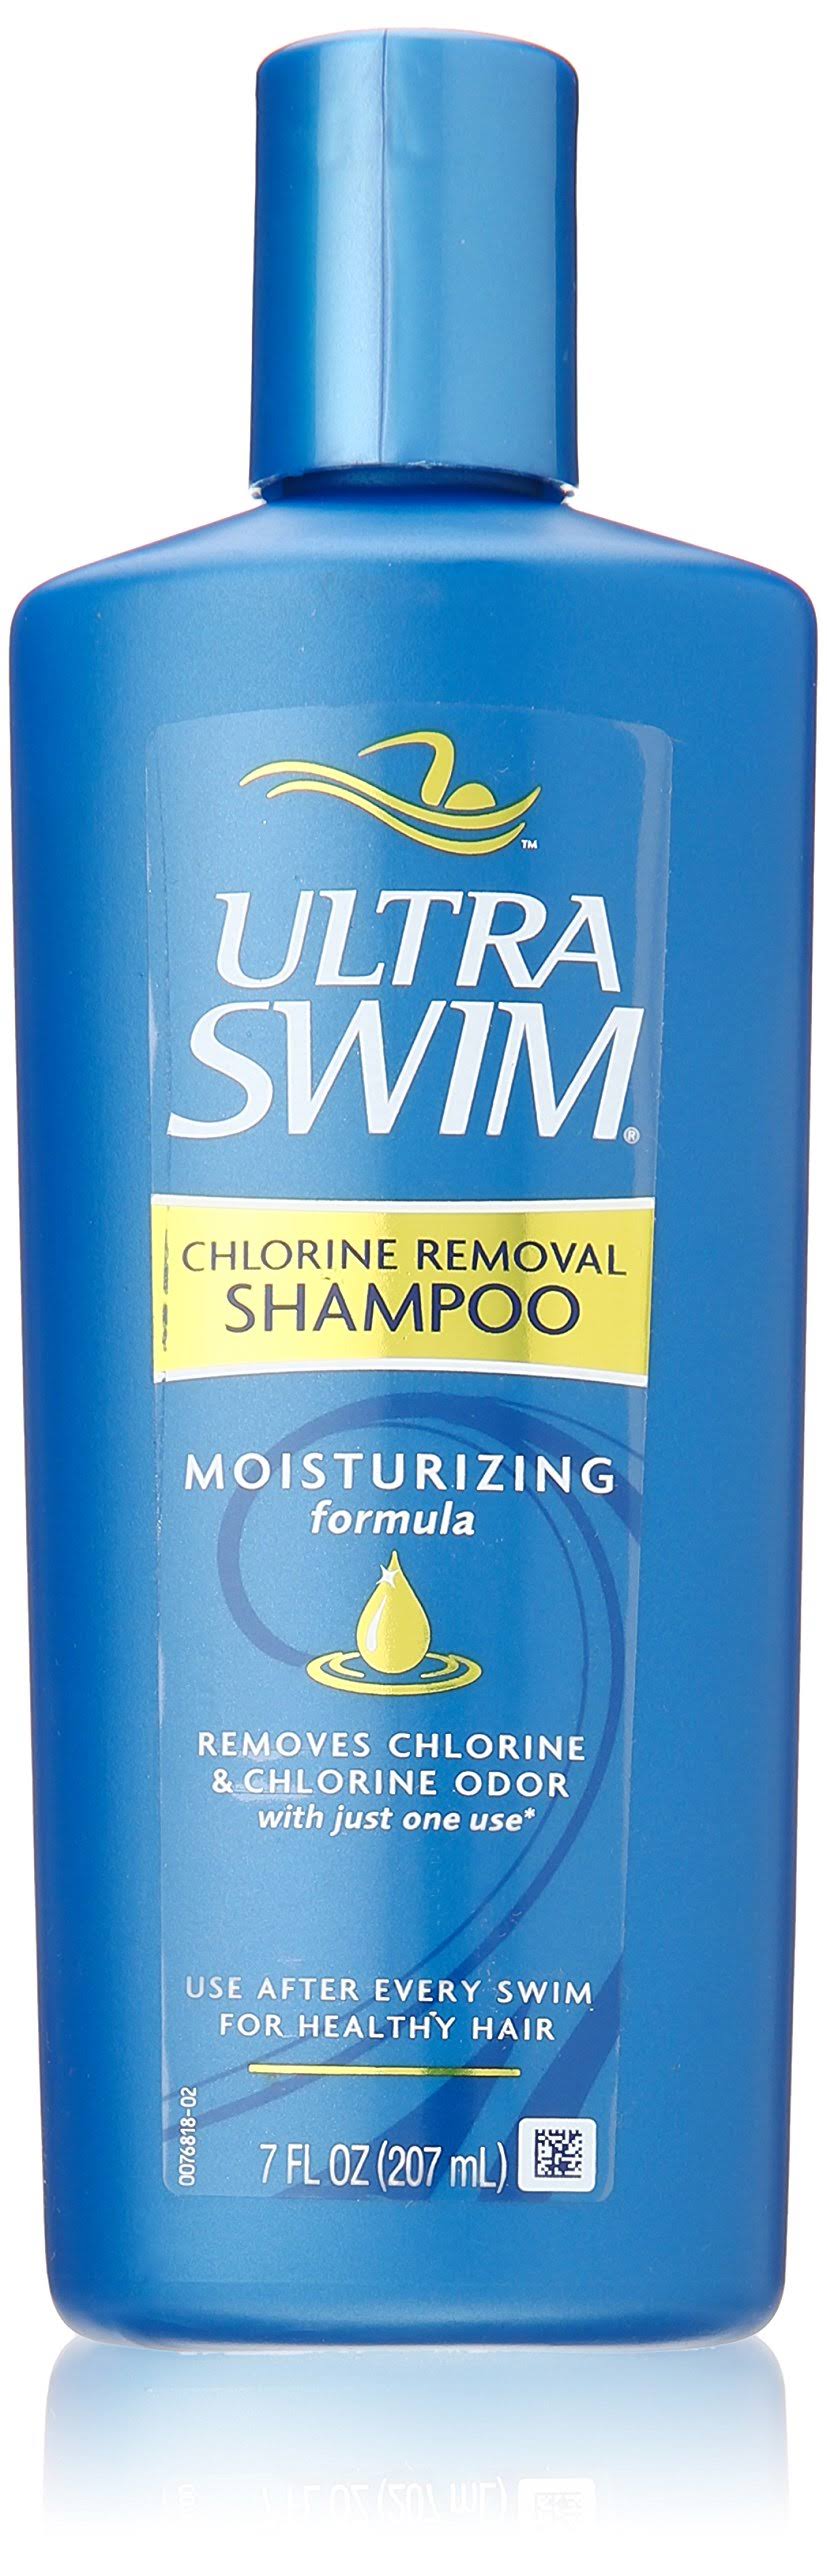 UltraSwim Chlorine-removal Shampoo, 7 Ounce